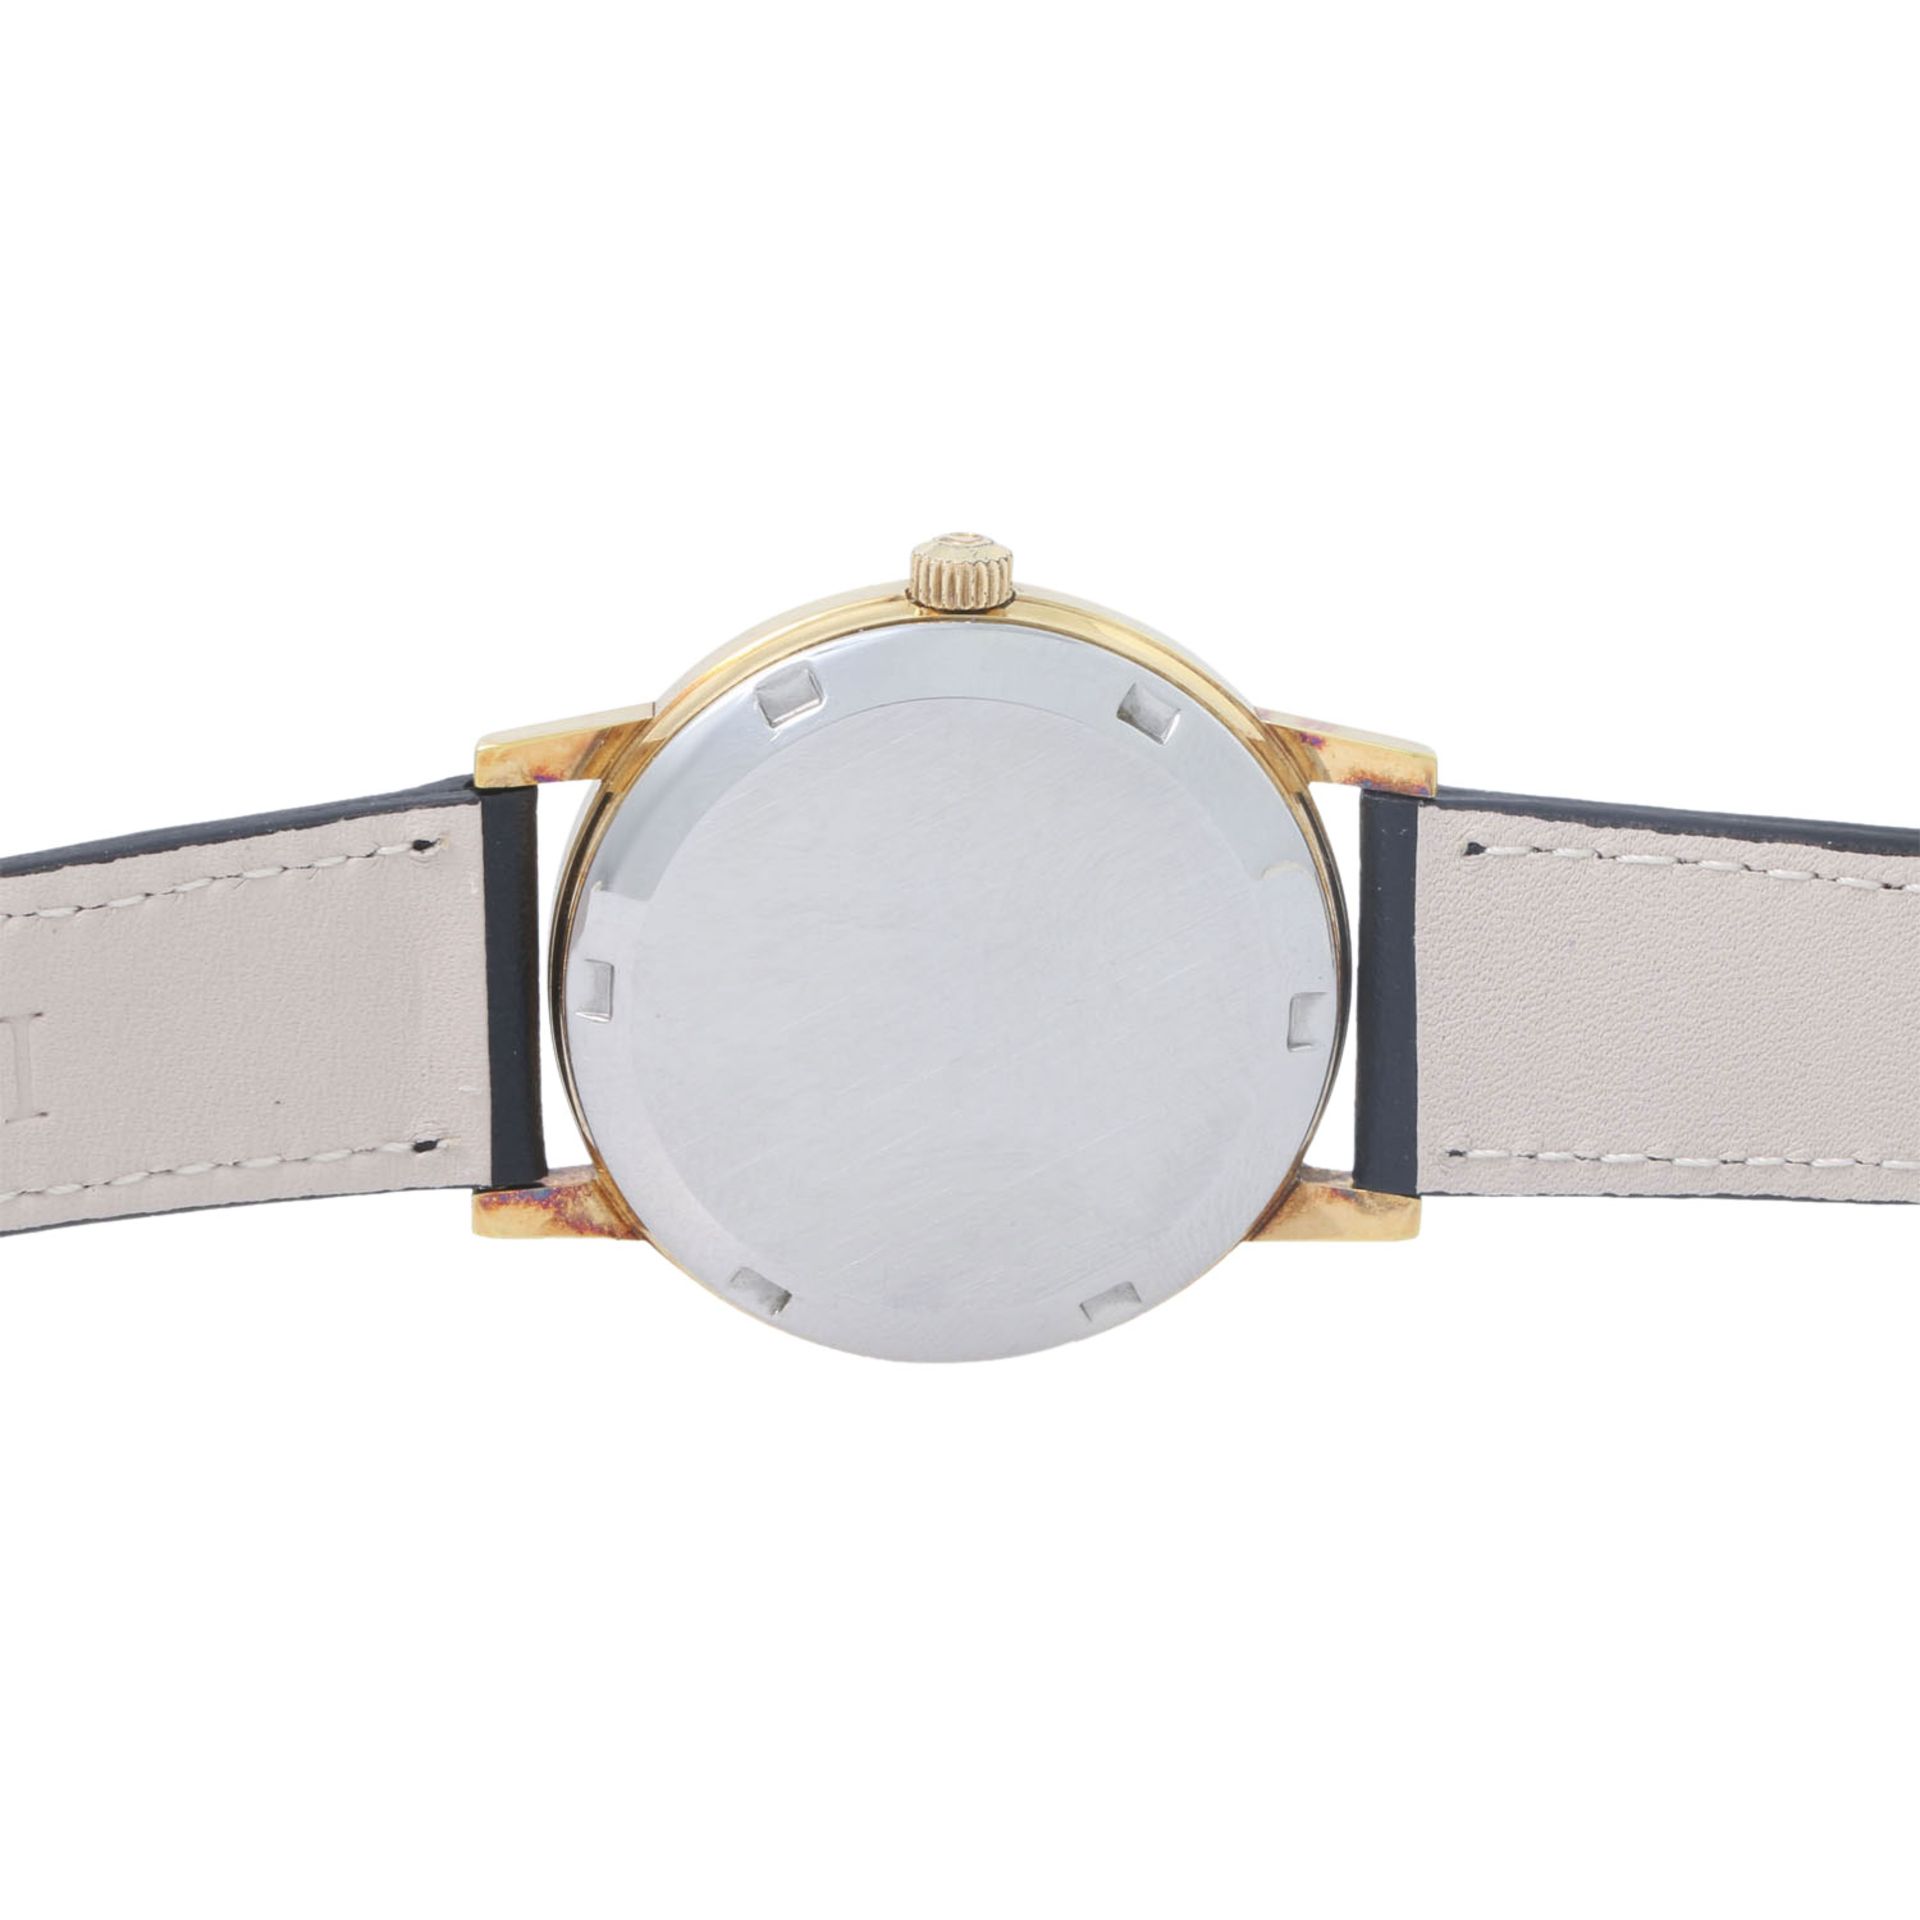 OMEGA Geneve Vintage Armbanduhr, Ref. 166.0163. Ca. 1970er Jahre. - Bild 2 aus 7